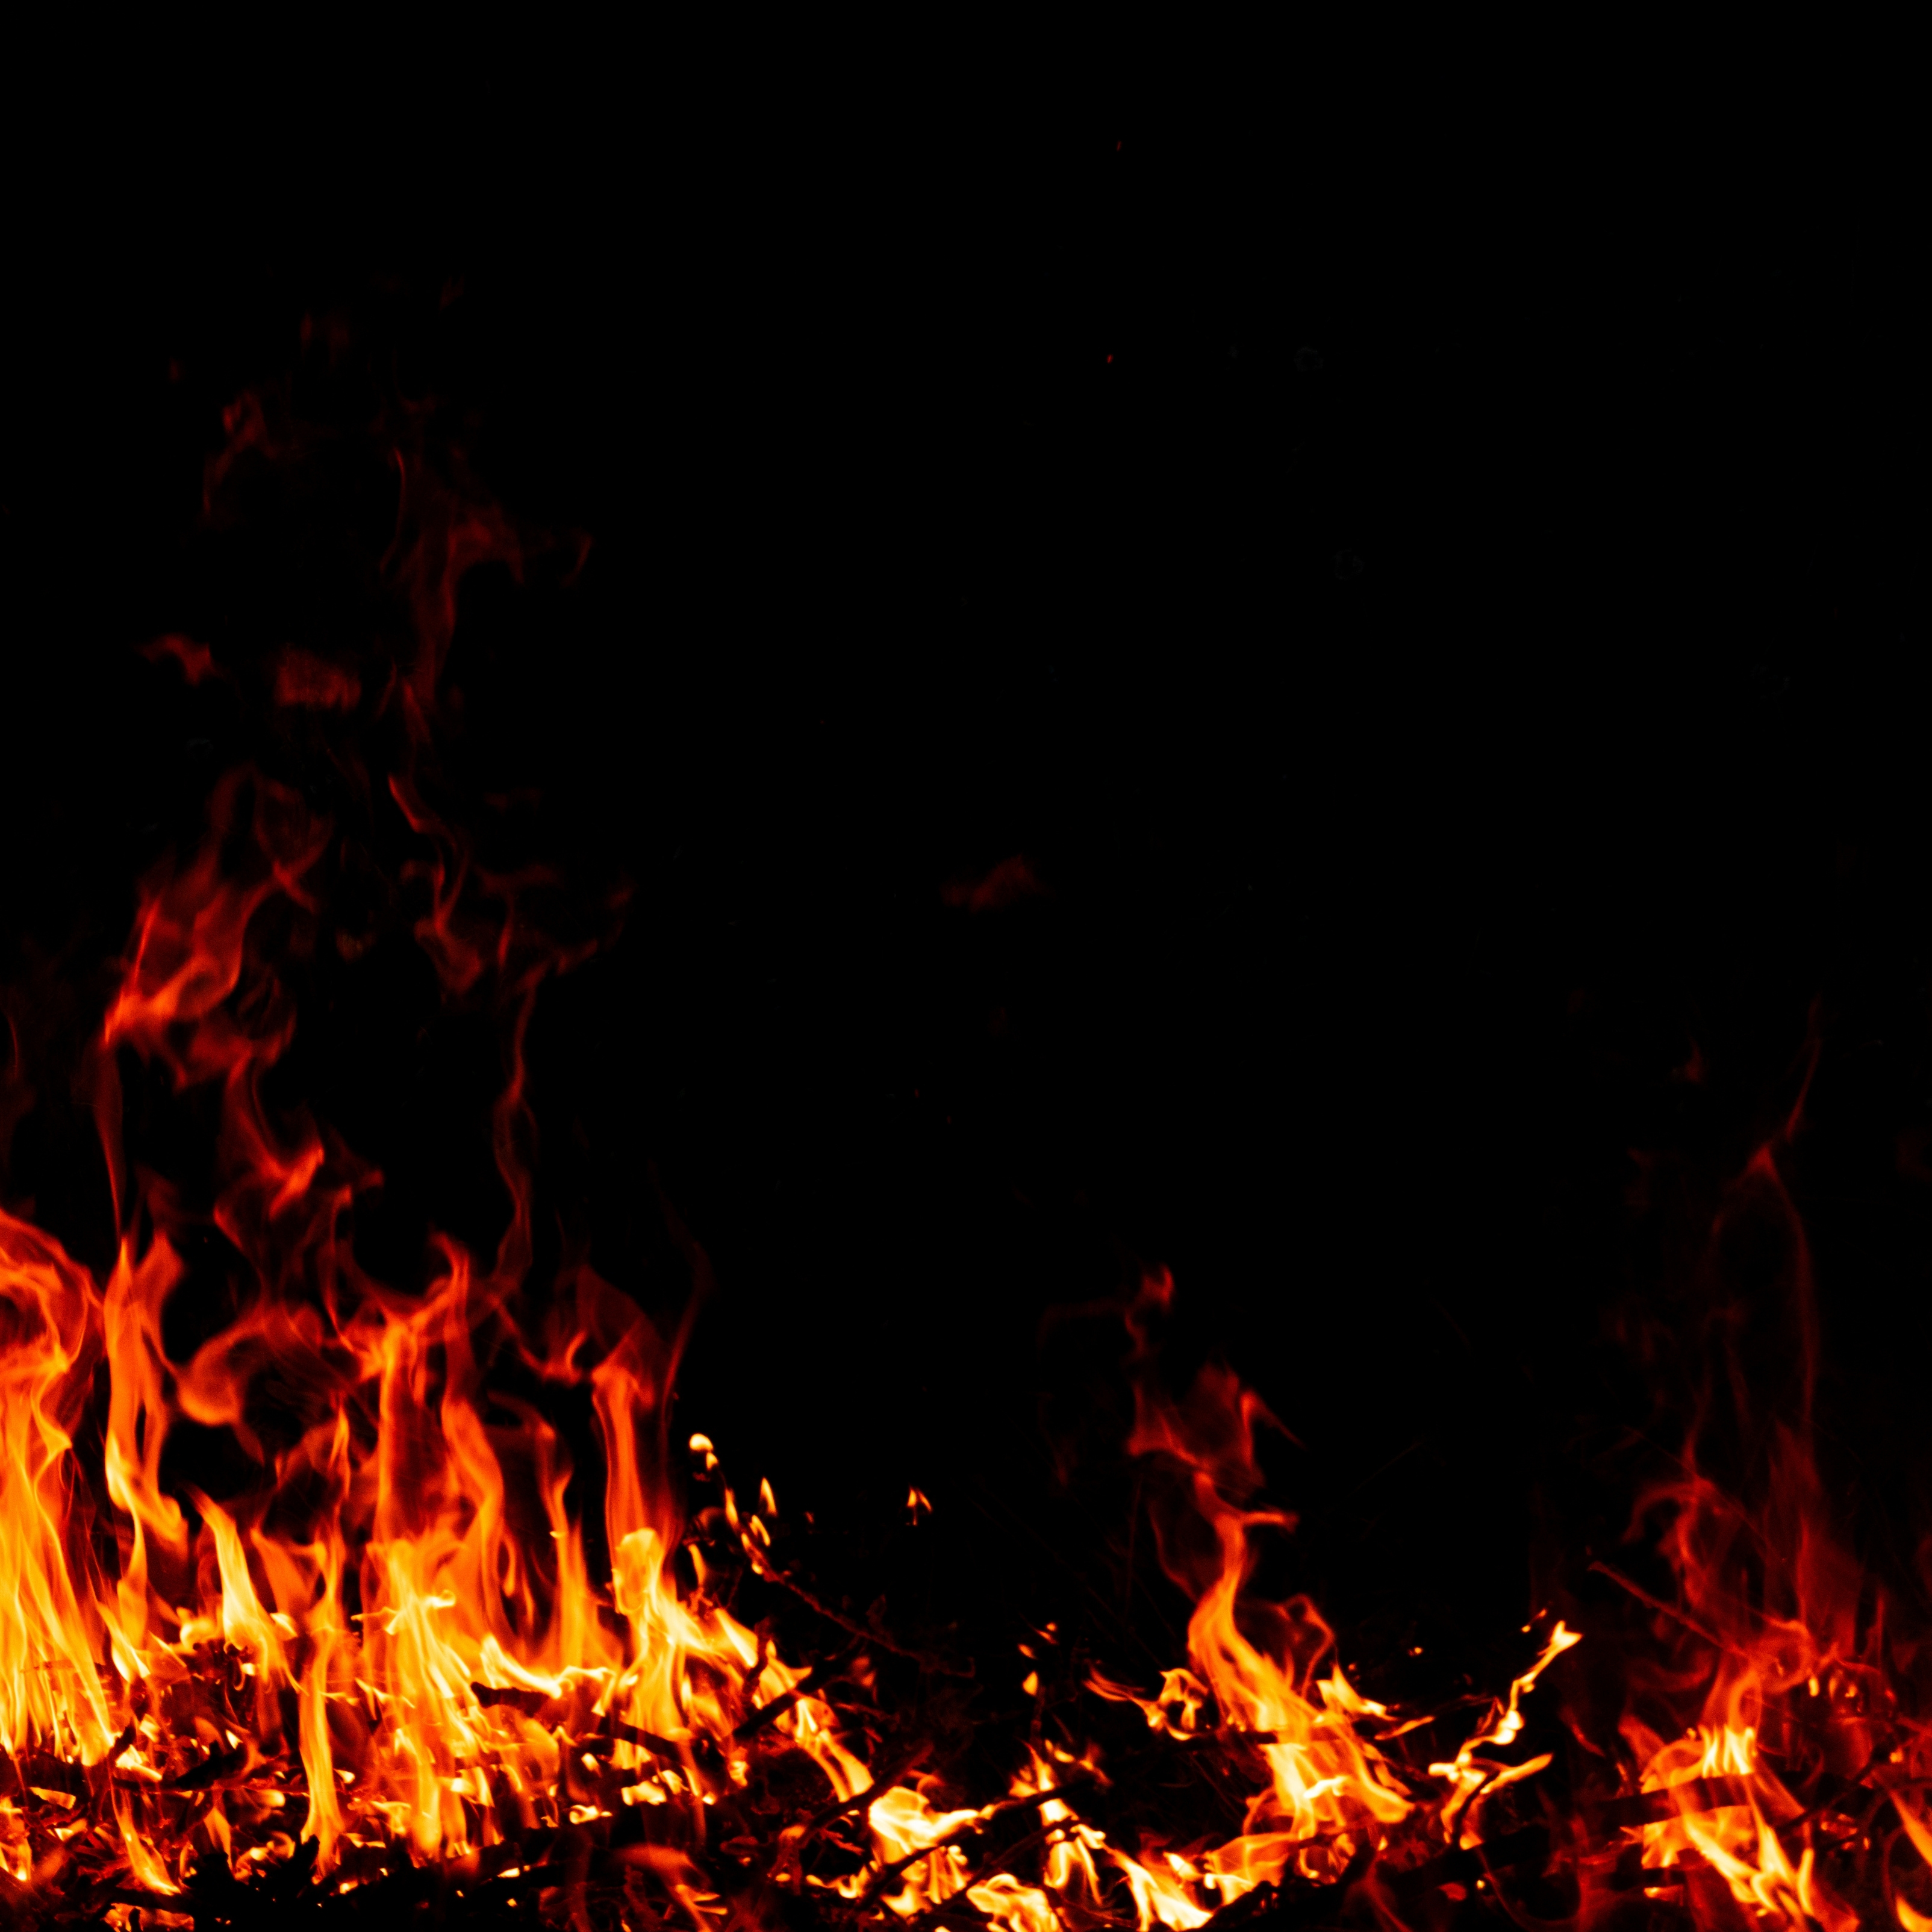 iPad Wallpapers Fire Orange Flame Hot Dark Black Background iPad Wallpaper 3208x3208 px